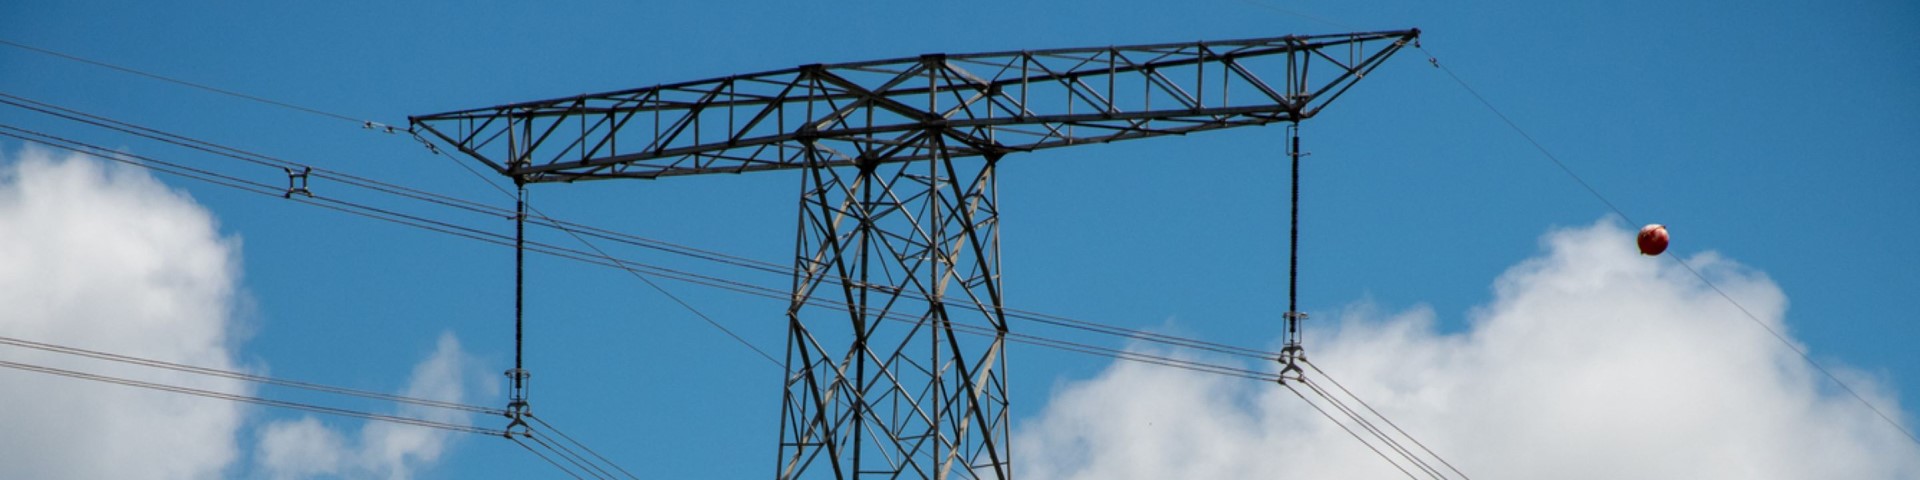 The mast of a high-voltage power line against a blue sky. Copyright: GIZ